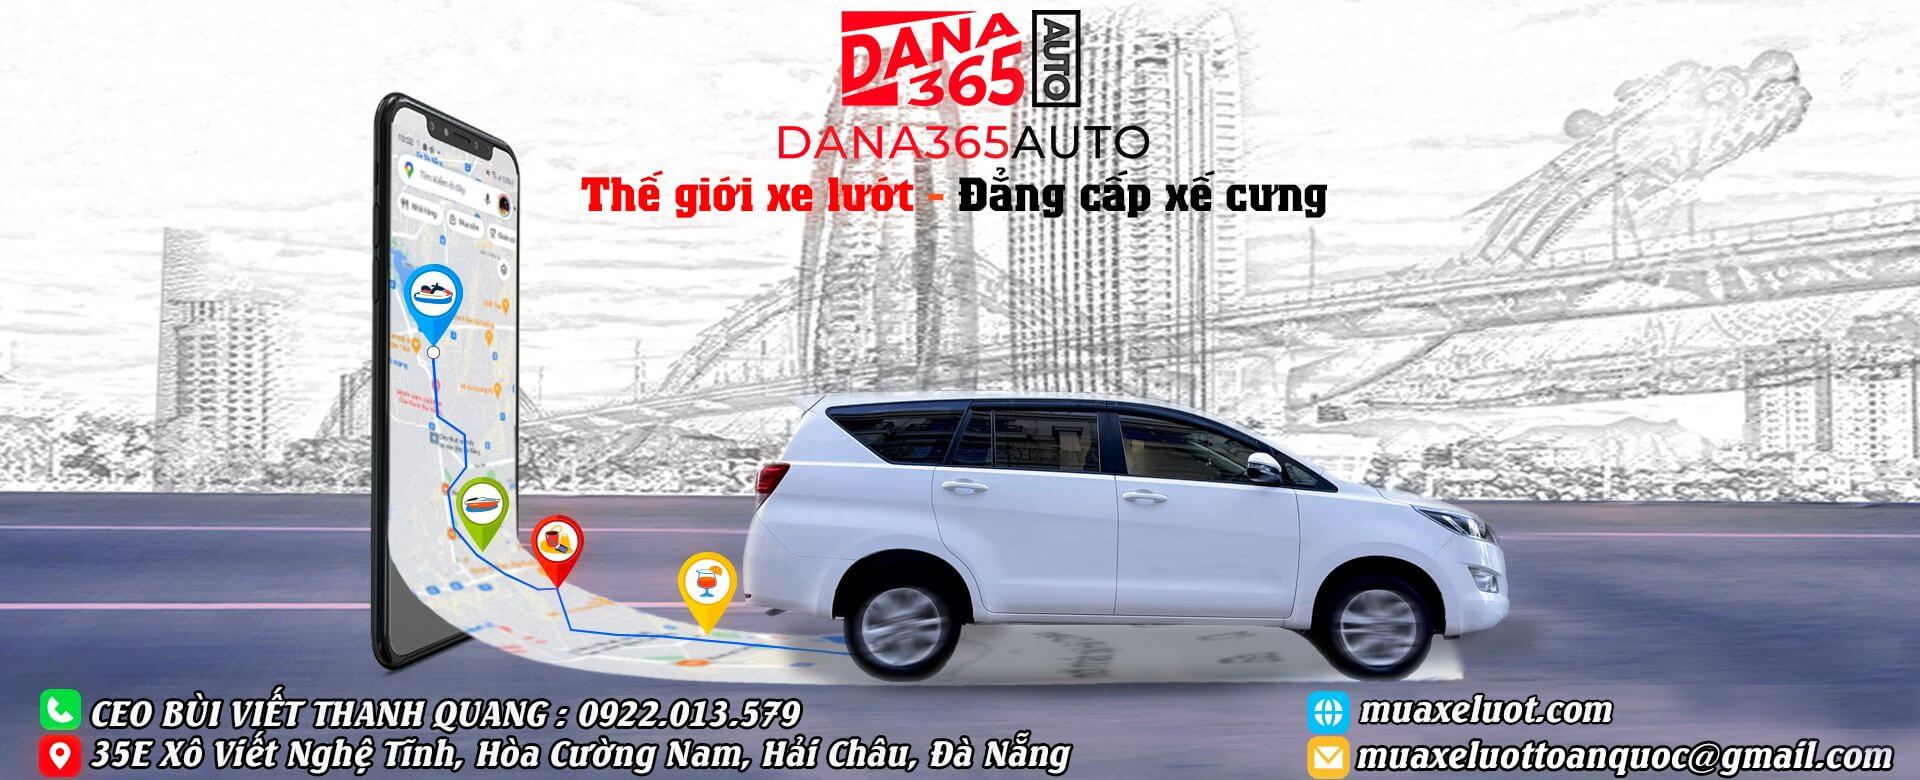 banner Dana365 Auto